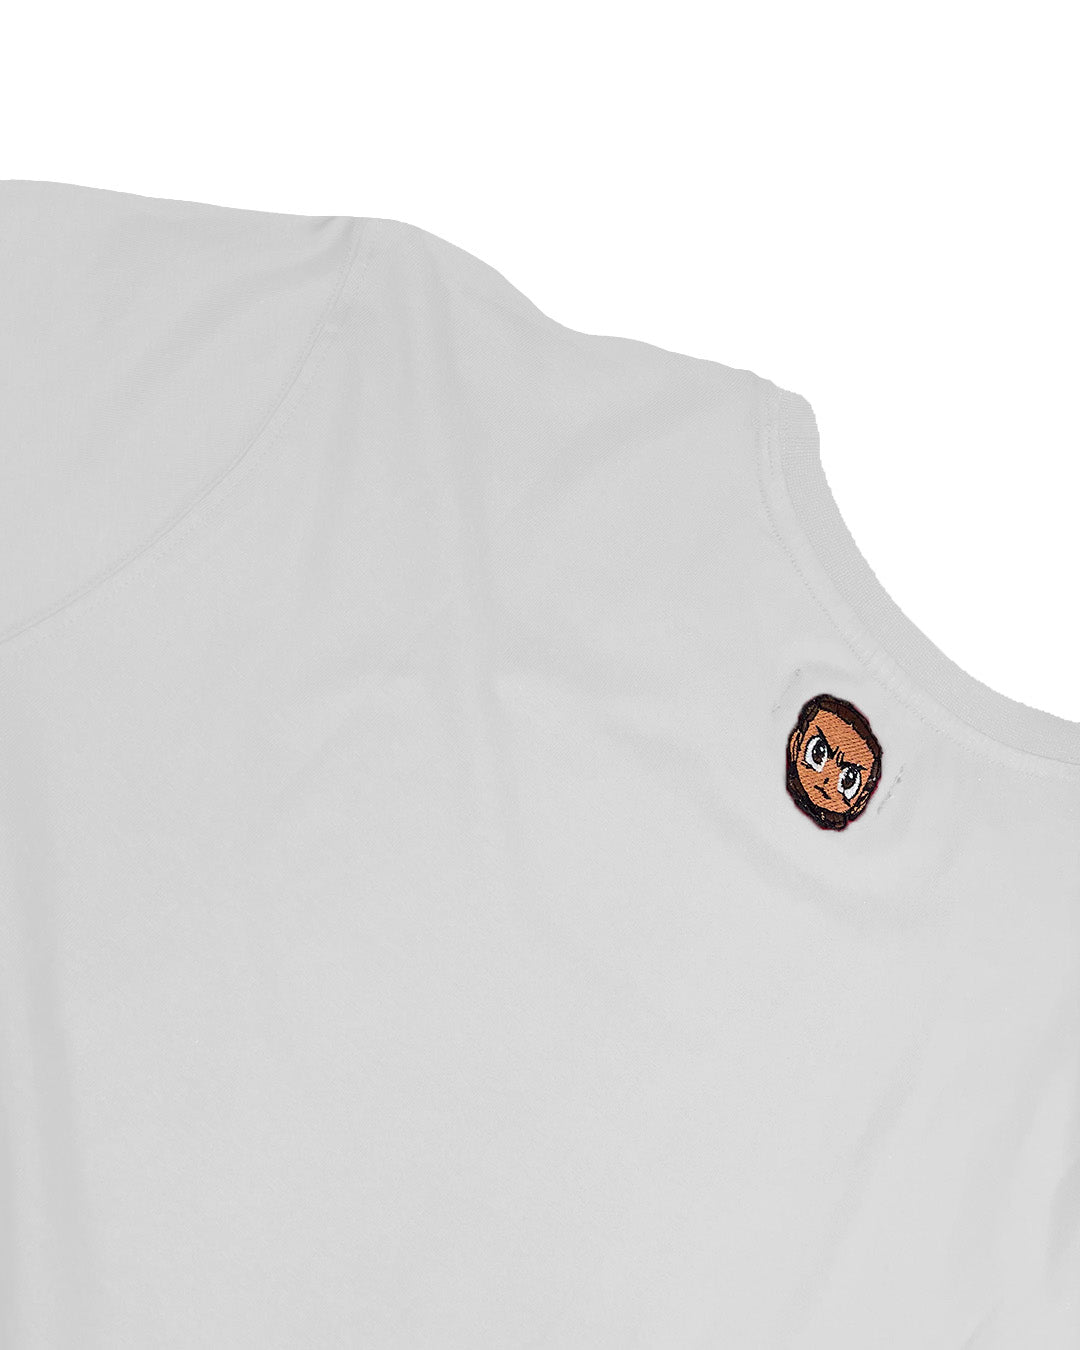 deKryptic x The Boondocks - Huey Boondocks Logo Embroidered White T-Shirt